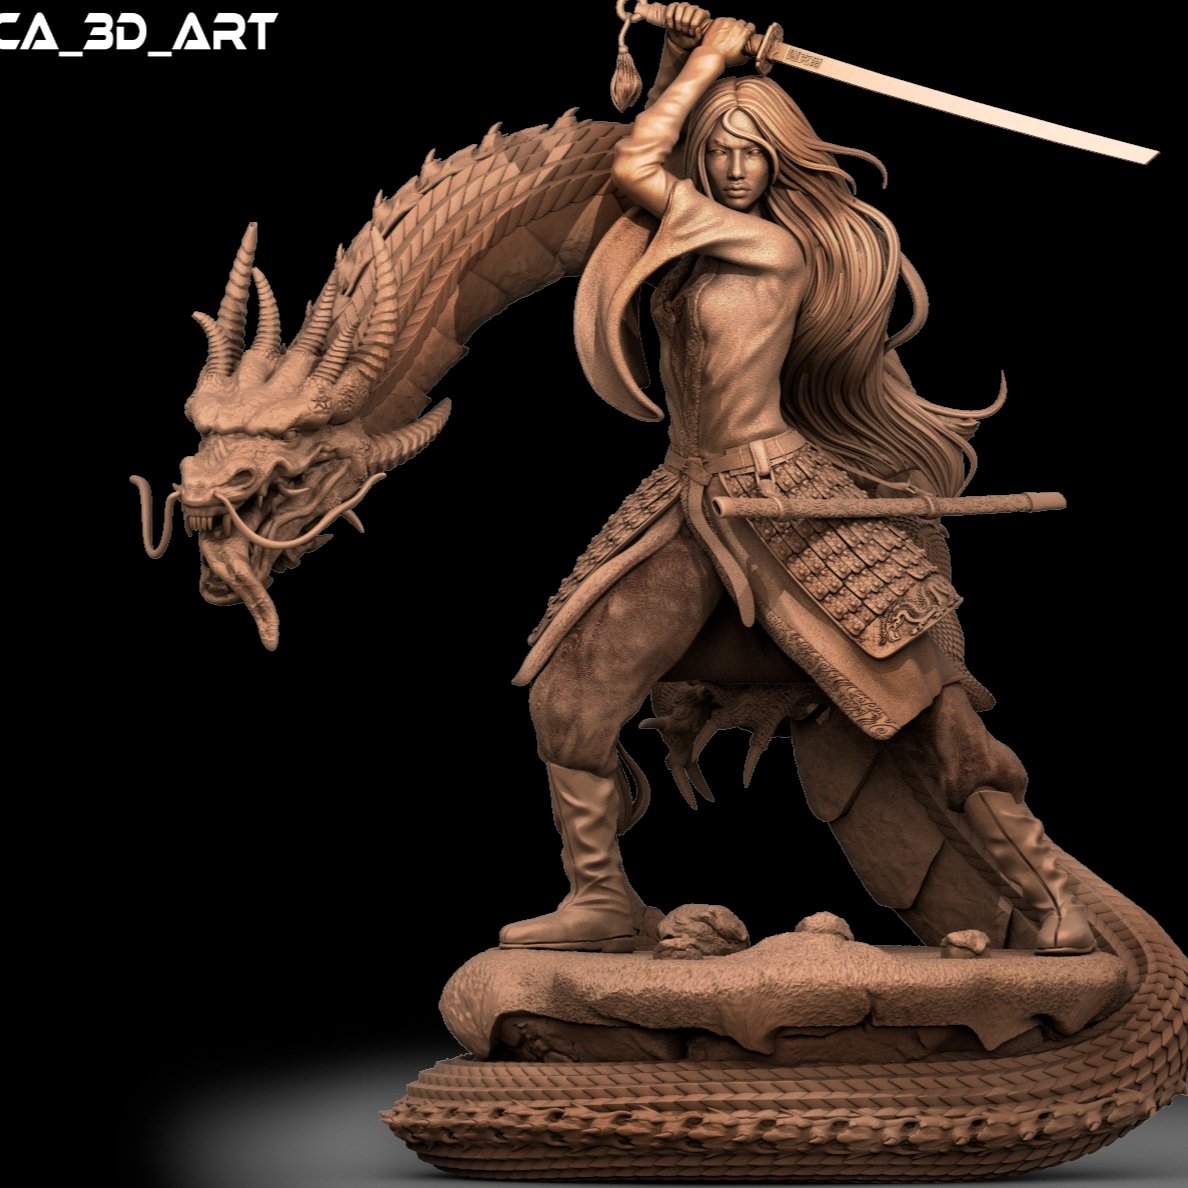 Mulan 3D Printed Figurine Fanart by ca_3d_art